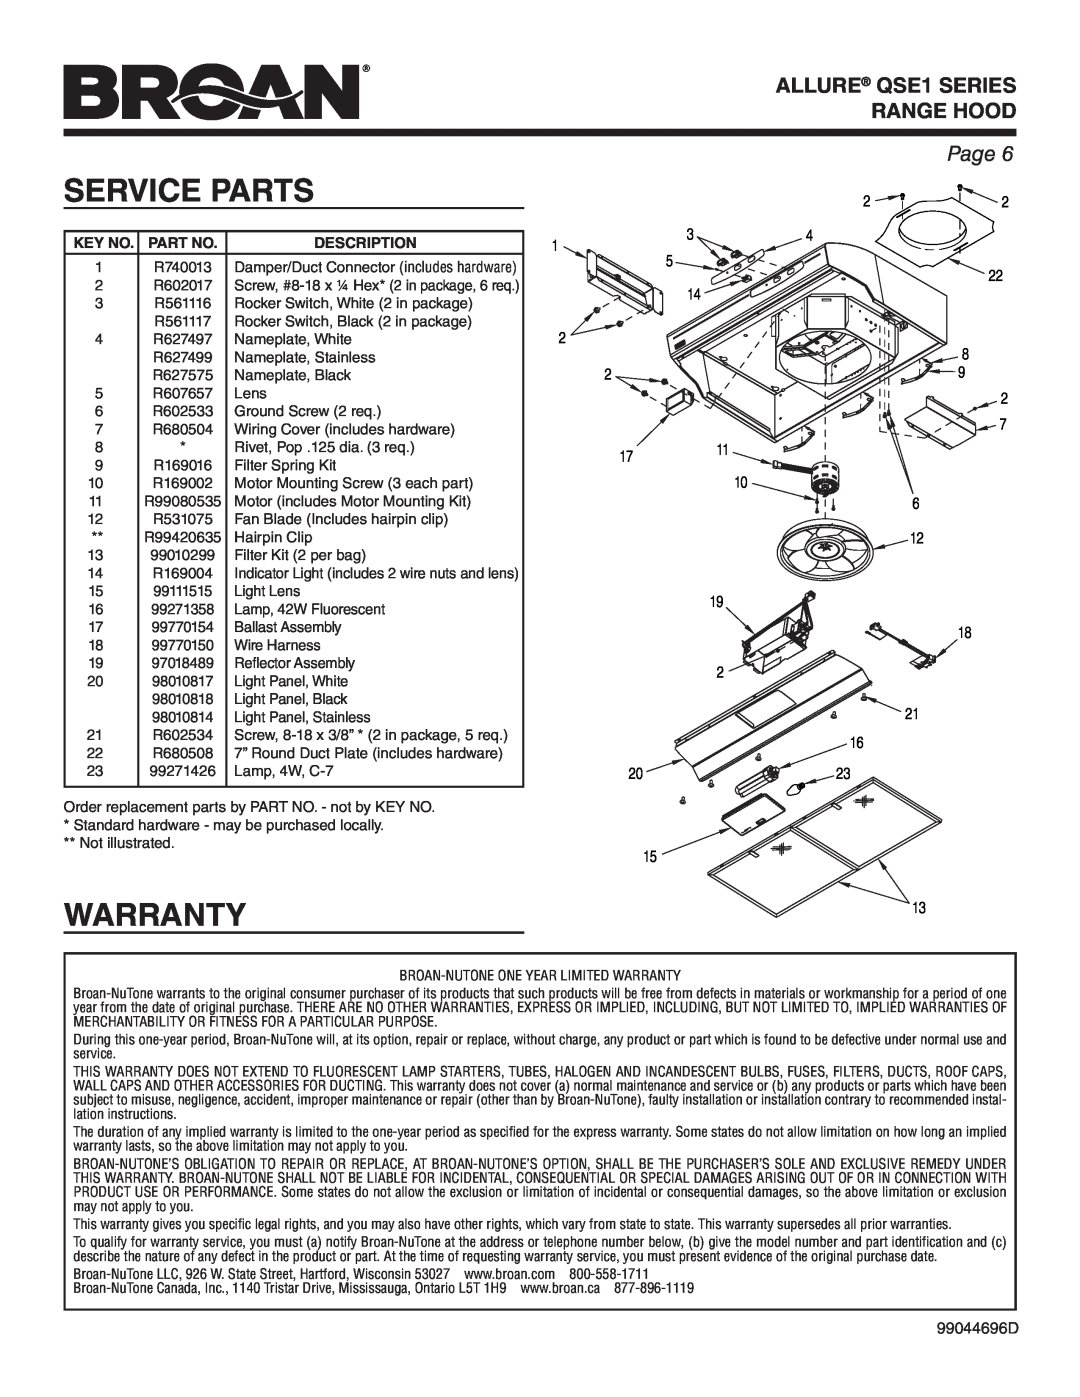 Broan warranty Service Parts, Warranty, ALLURE QSE1 SERIES RANGE HOOD, Page, 99044696D 